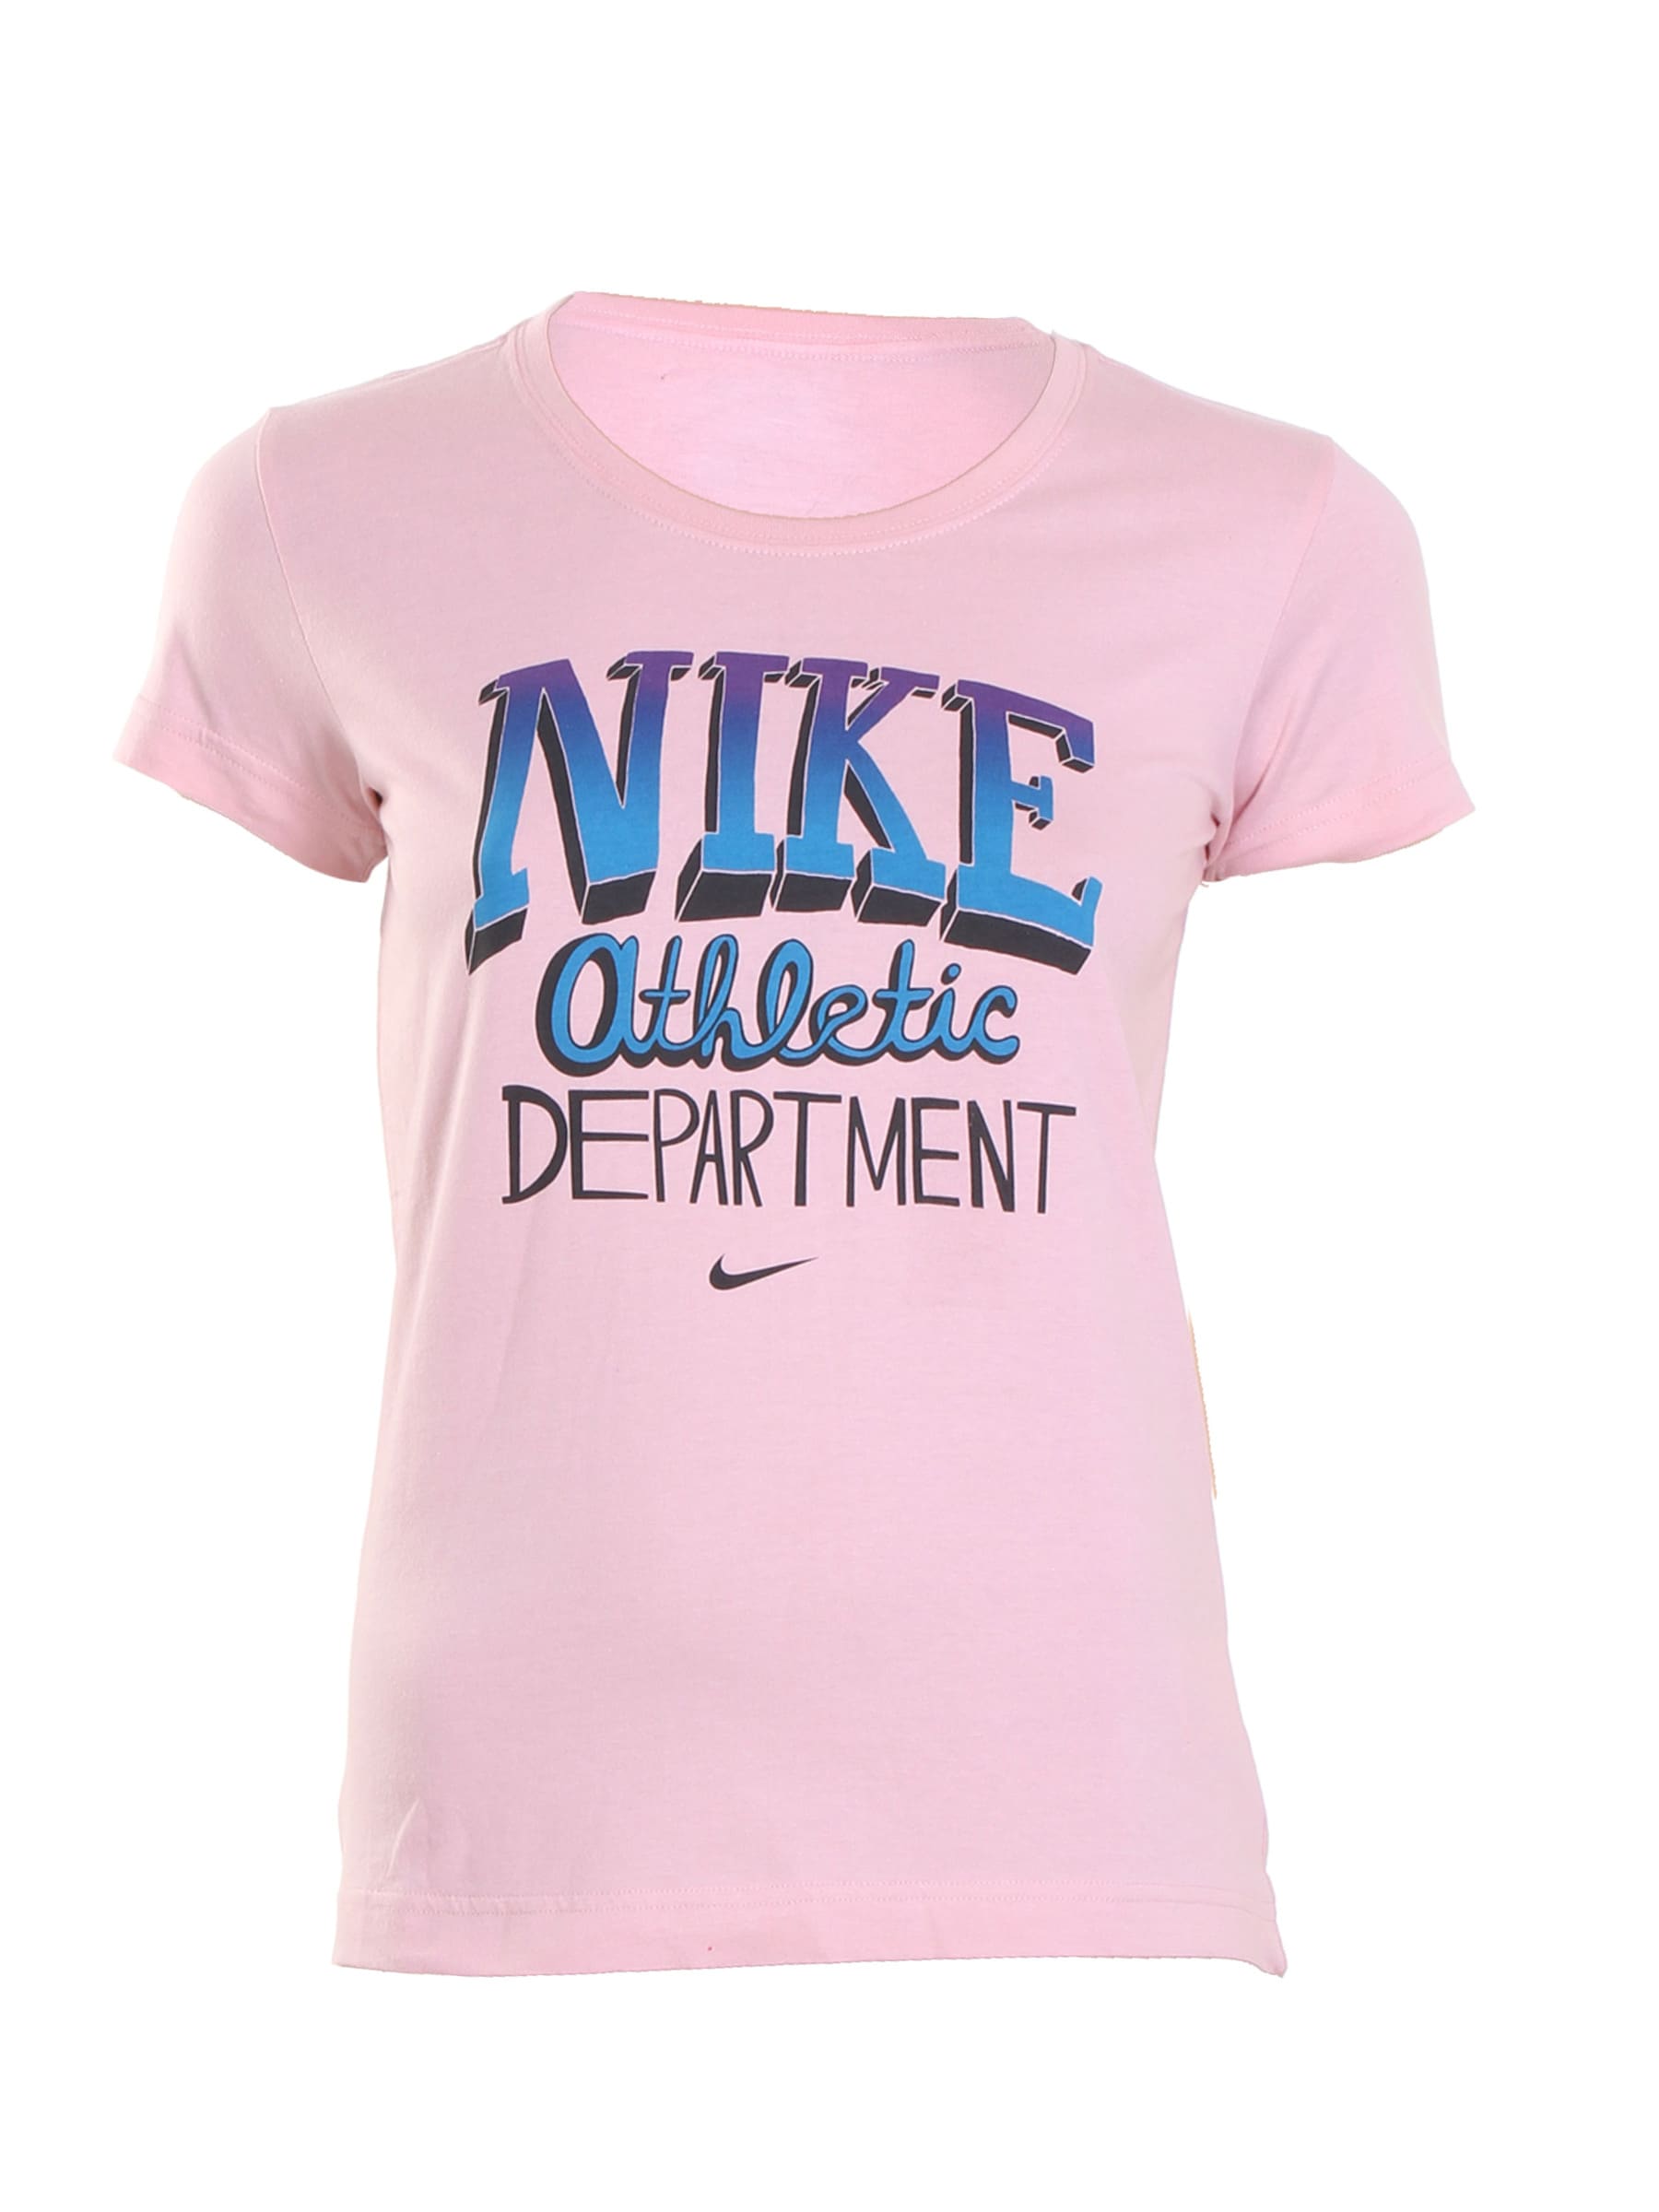 Nike Women DPT Pink T-shirt